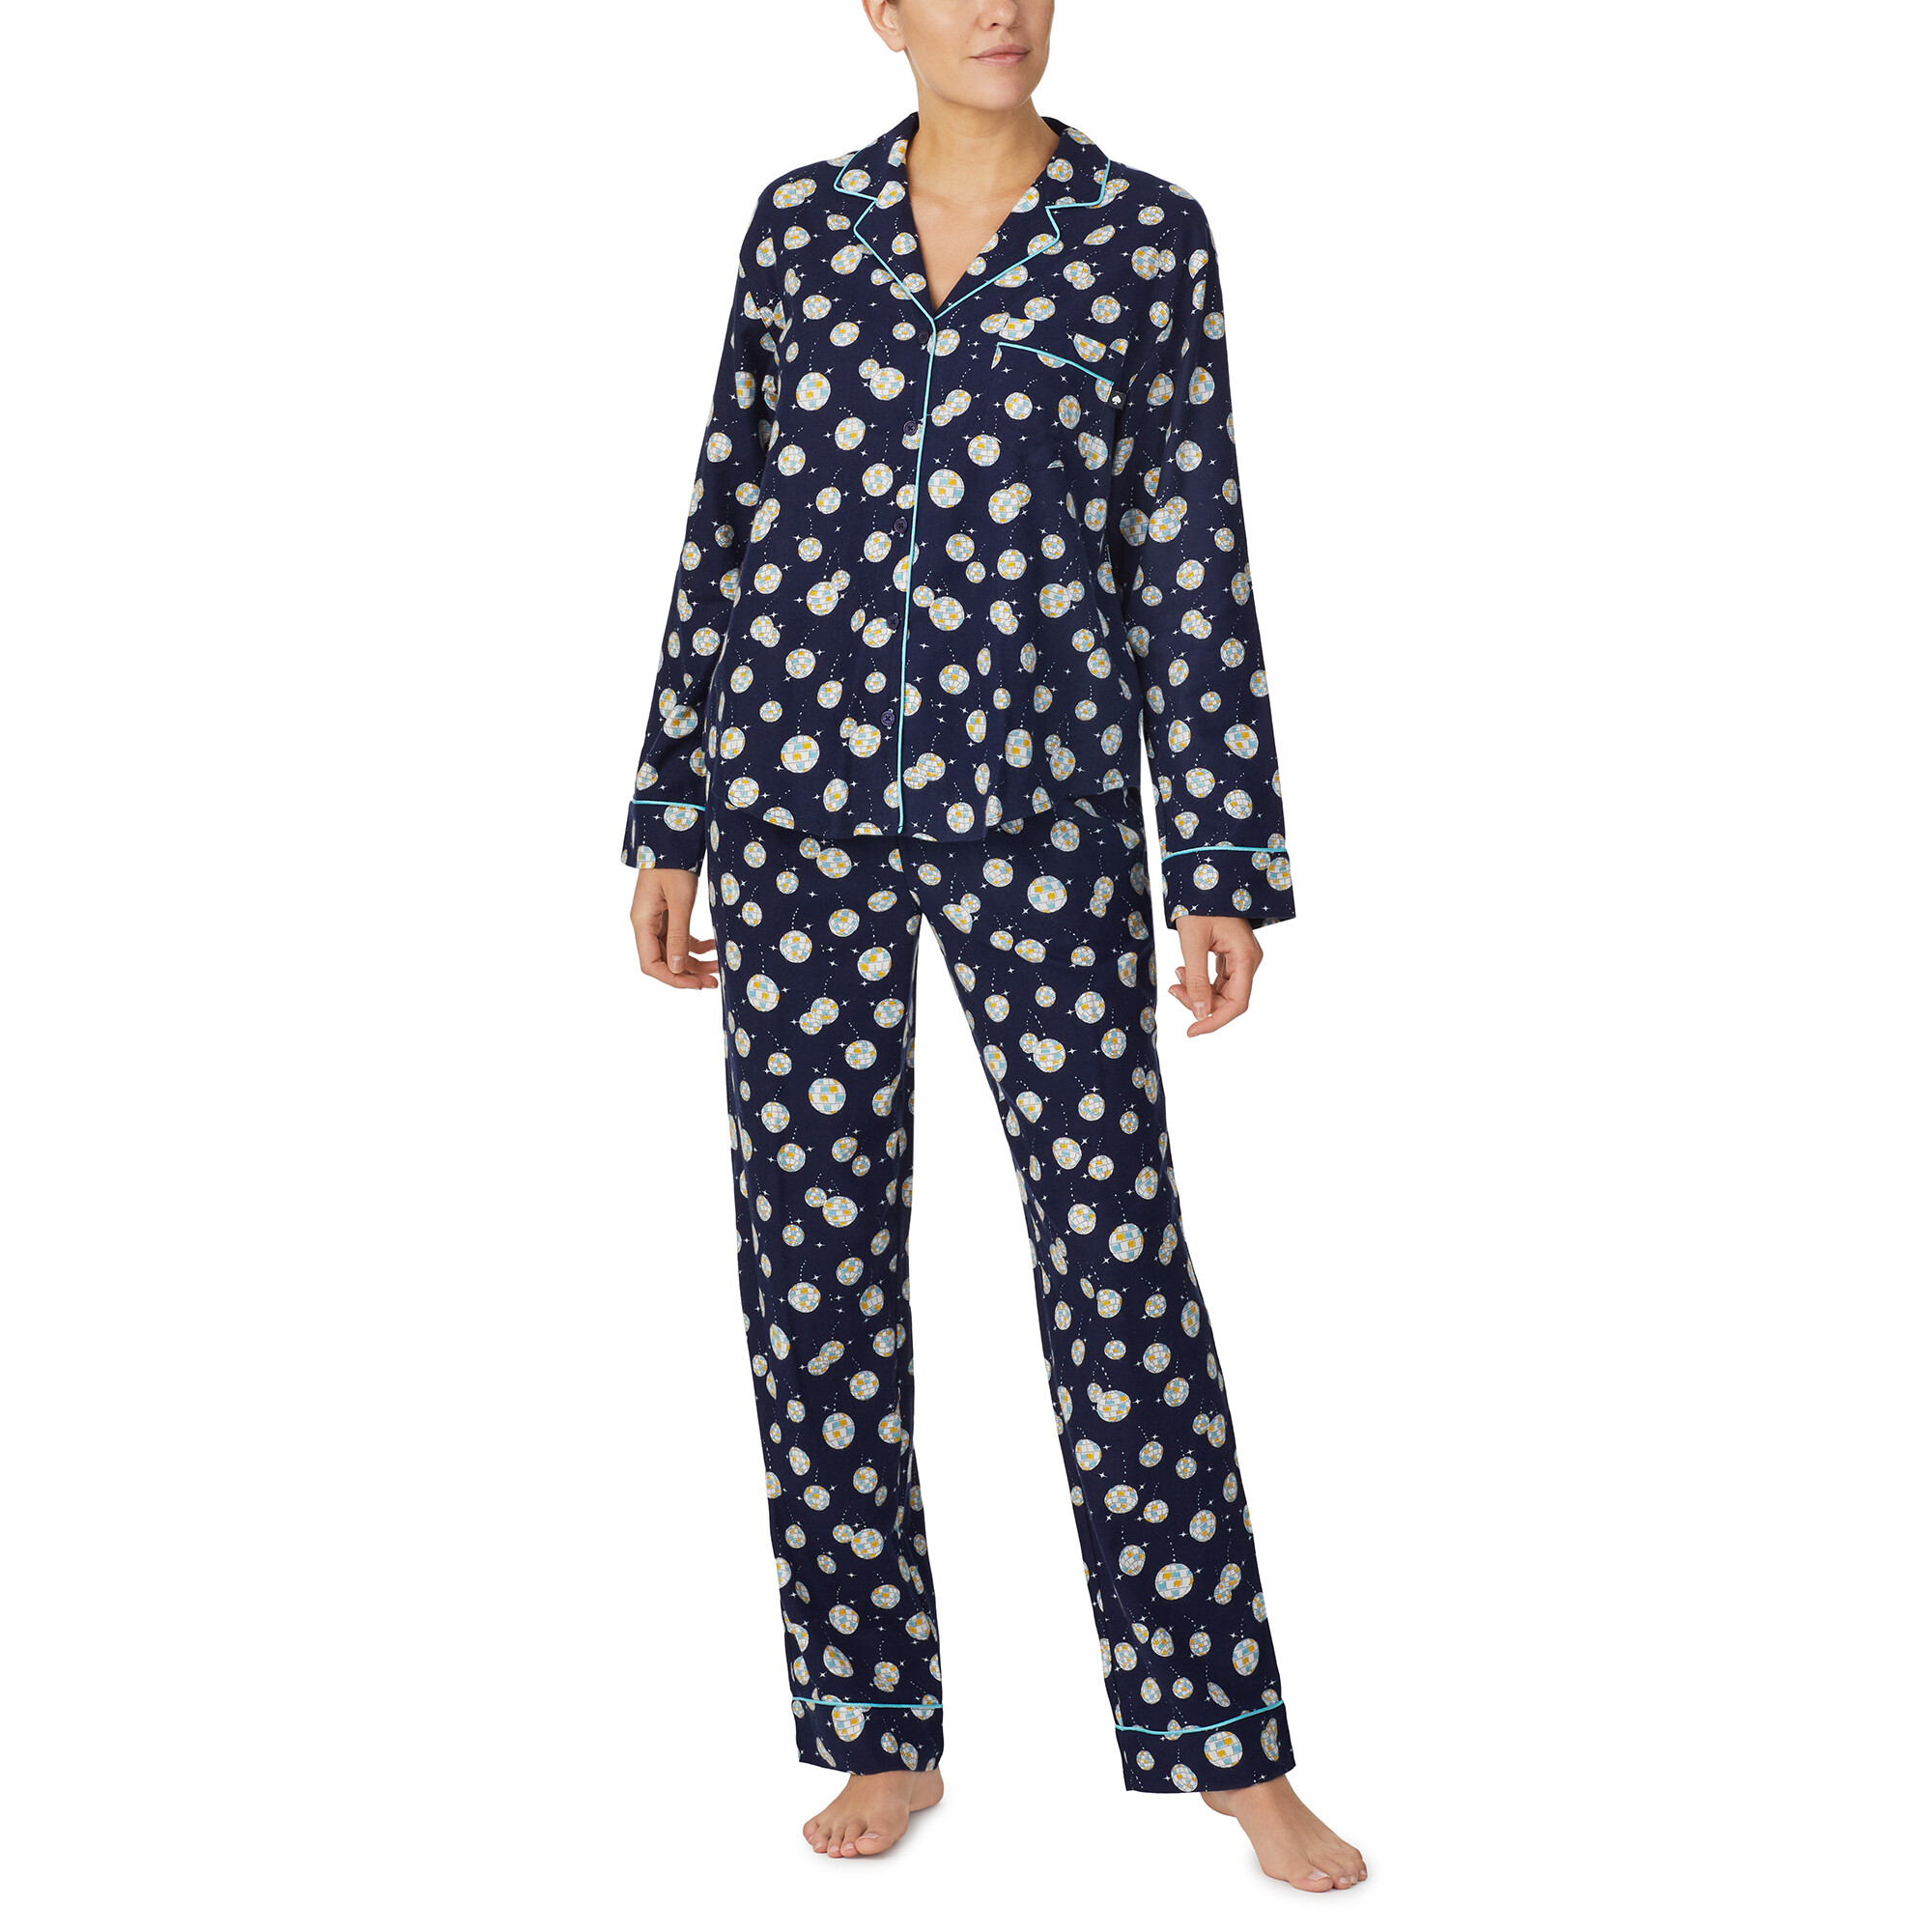 Imbracaminte Femei Kate Spade New York Long Sleeve Flannel Pajama Set Disco Ball